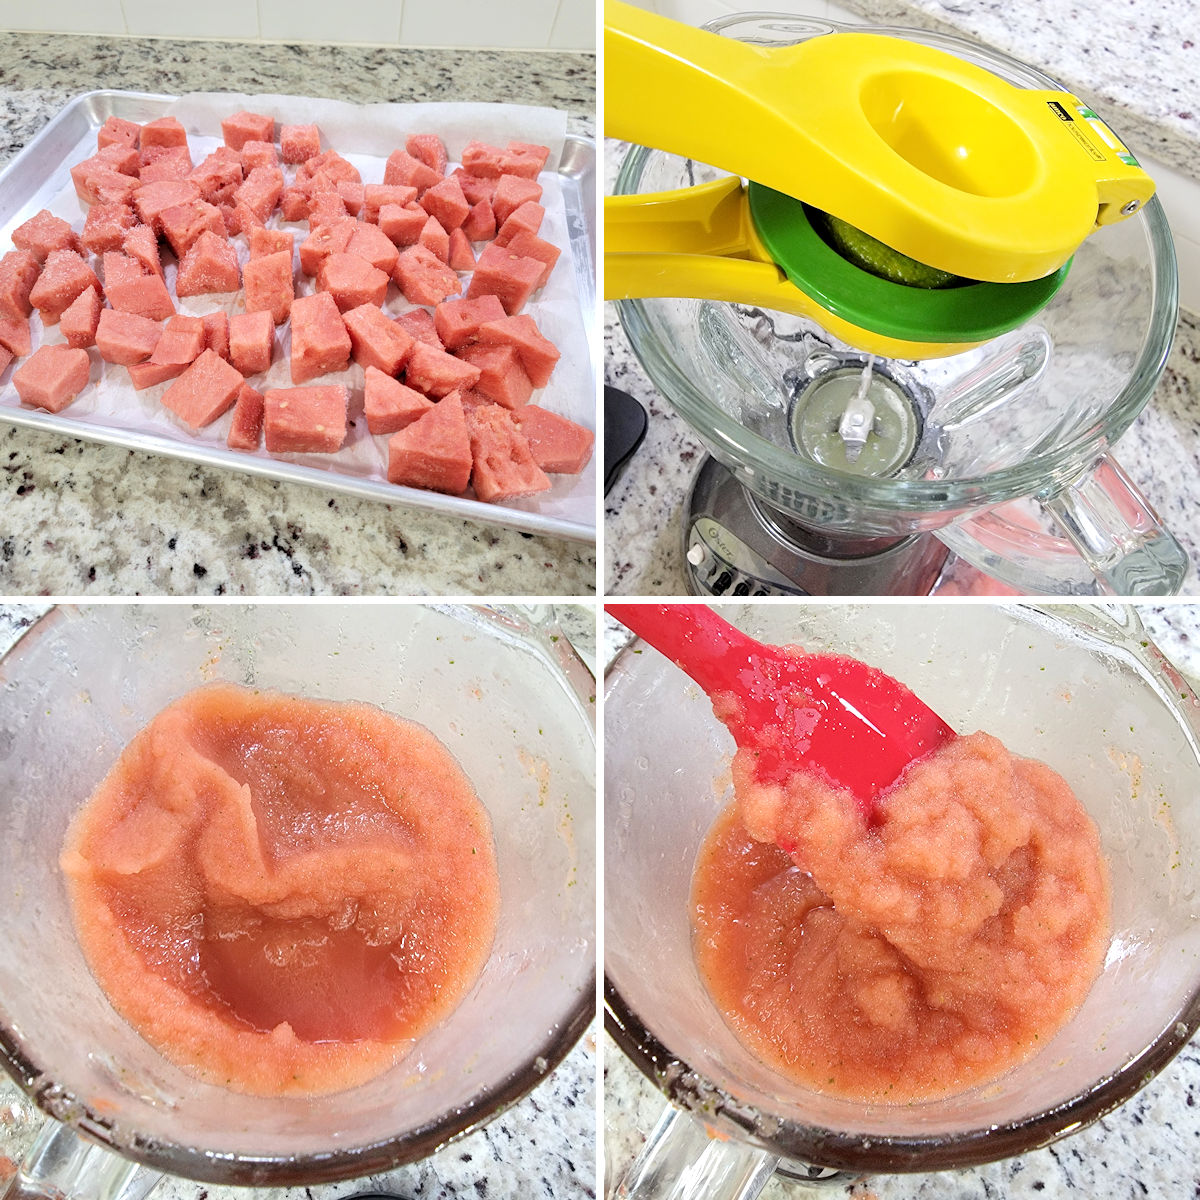 Freezing watermelon and blending to make a slushie.